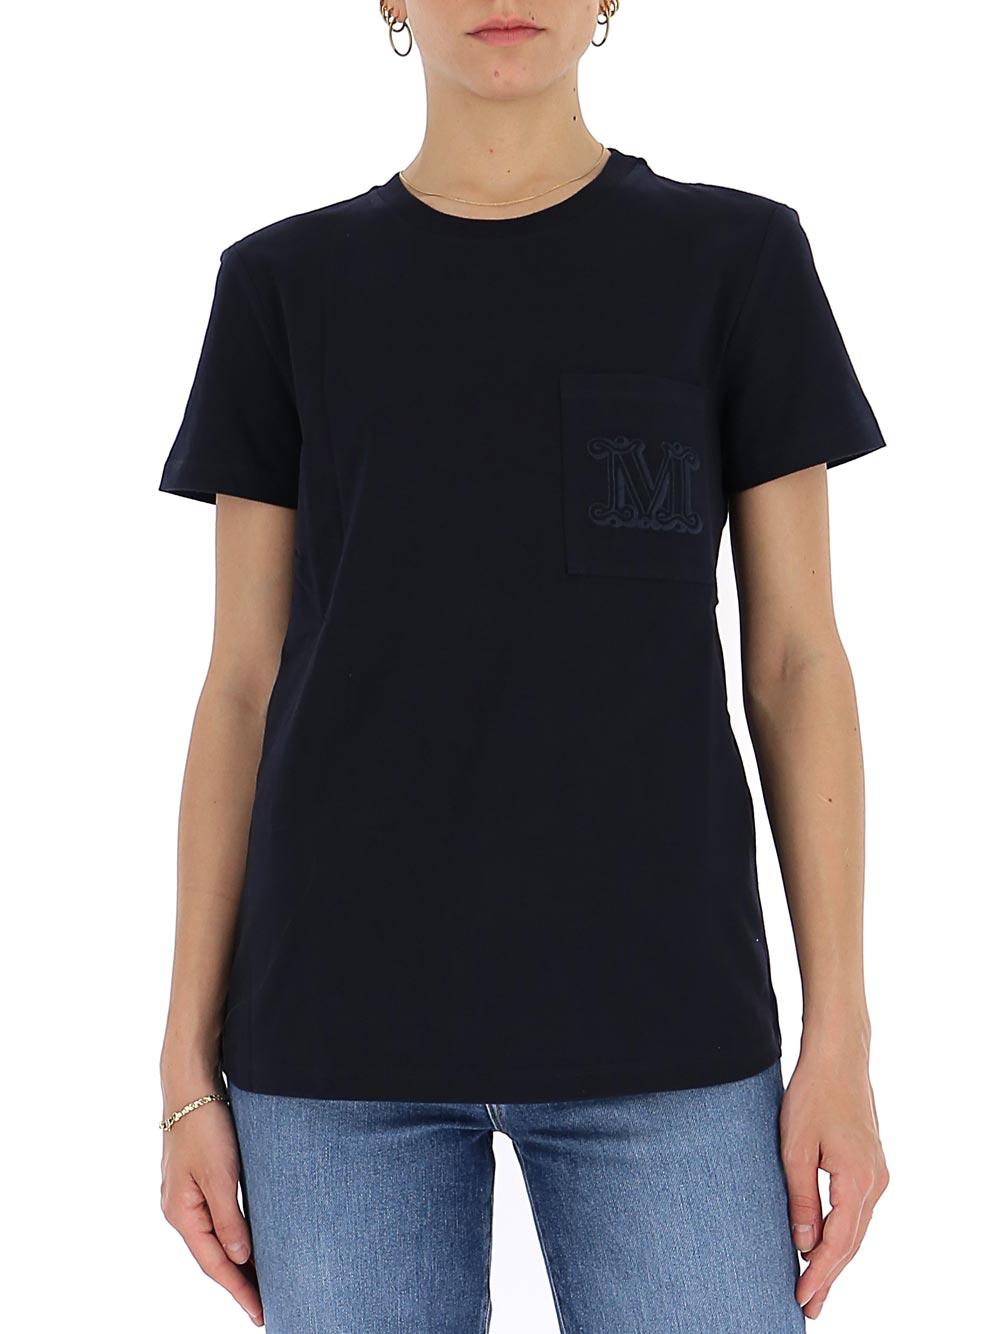 Max Mara Cotton Logo T-shirt in Black - Lyst